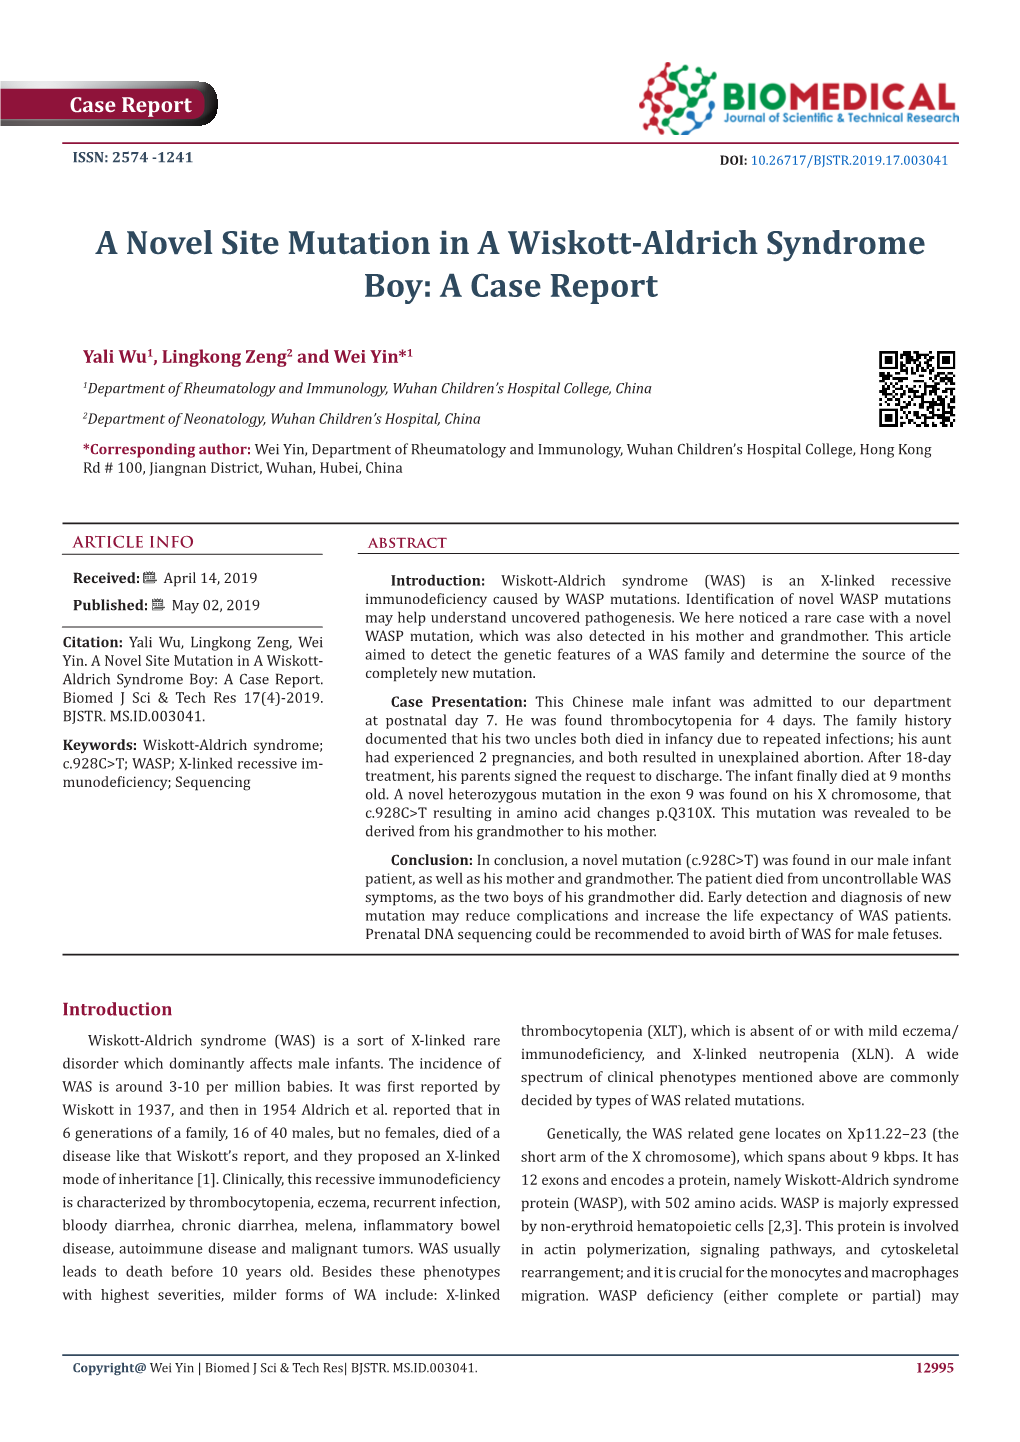 A Novel Site Mutation in a Wiskott-Aldrich Syndrome Boy: a Case Report